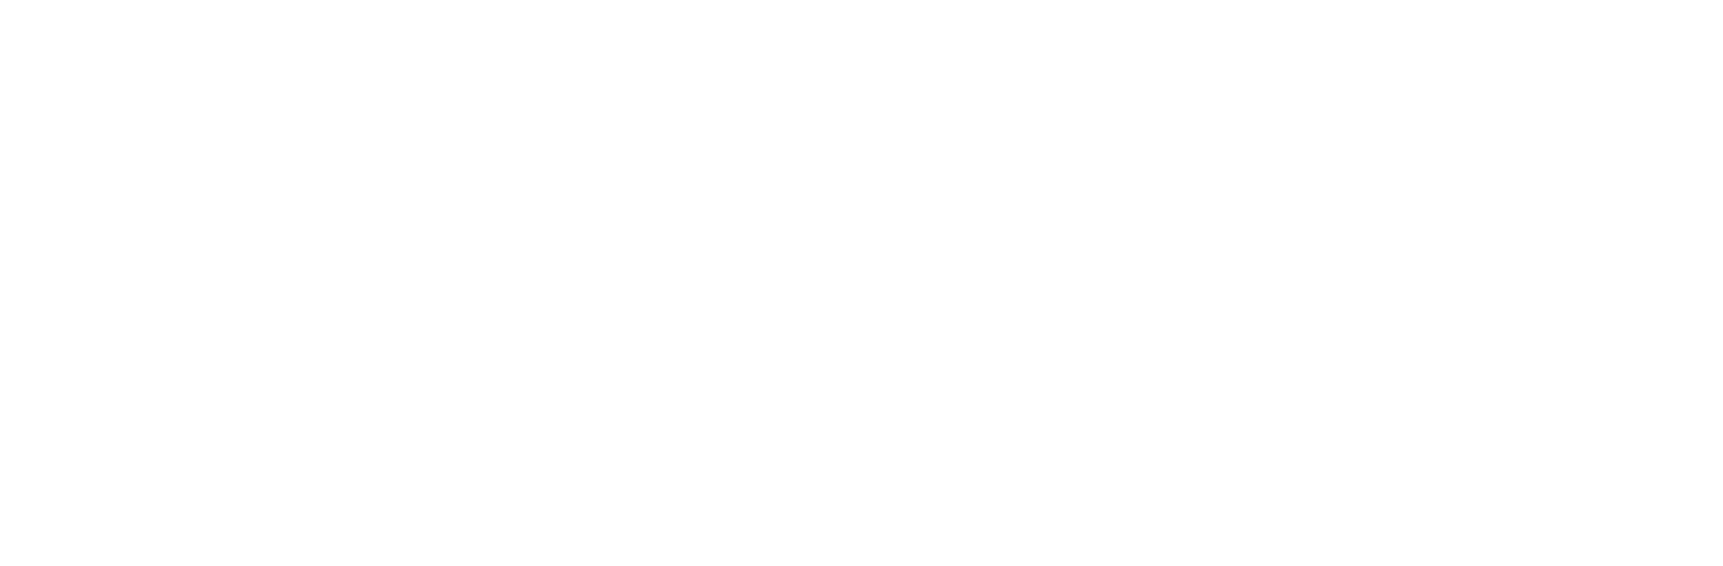 Sustainable Kaipara logo